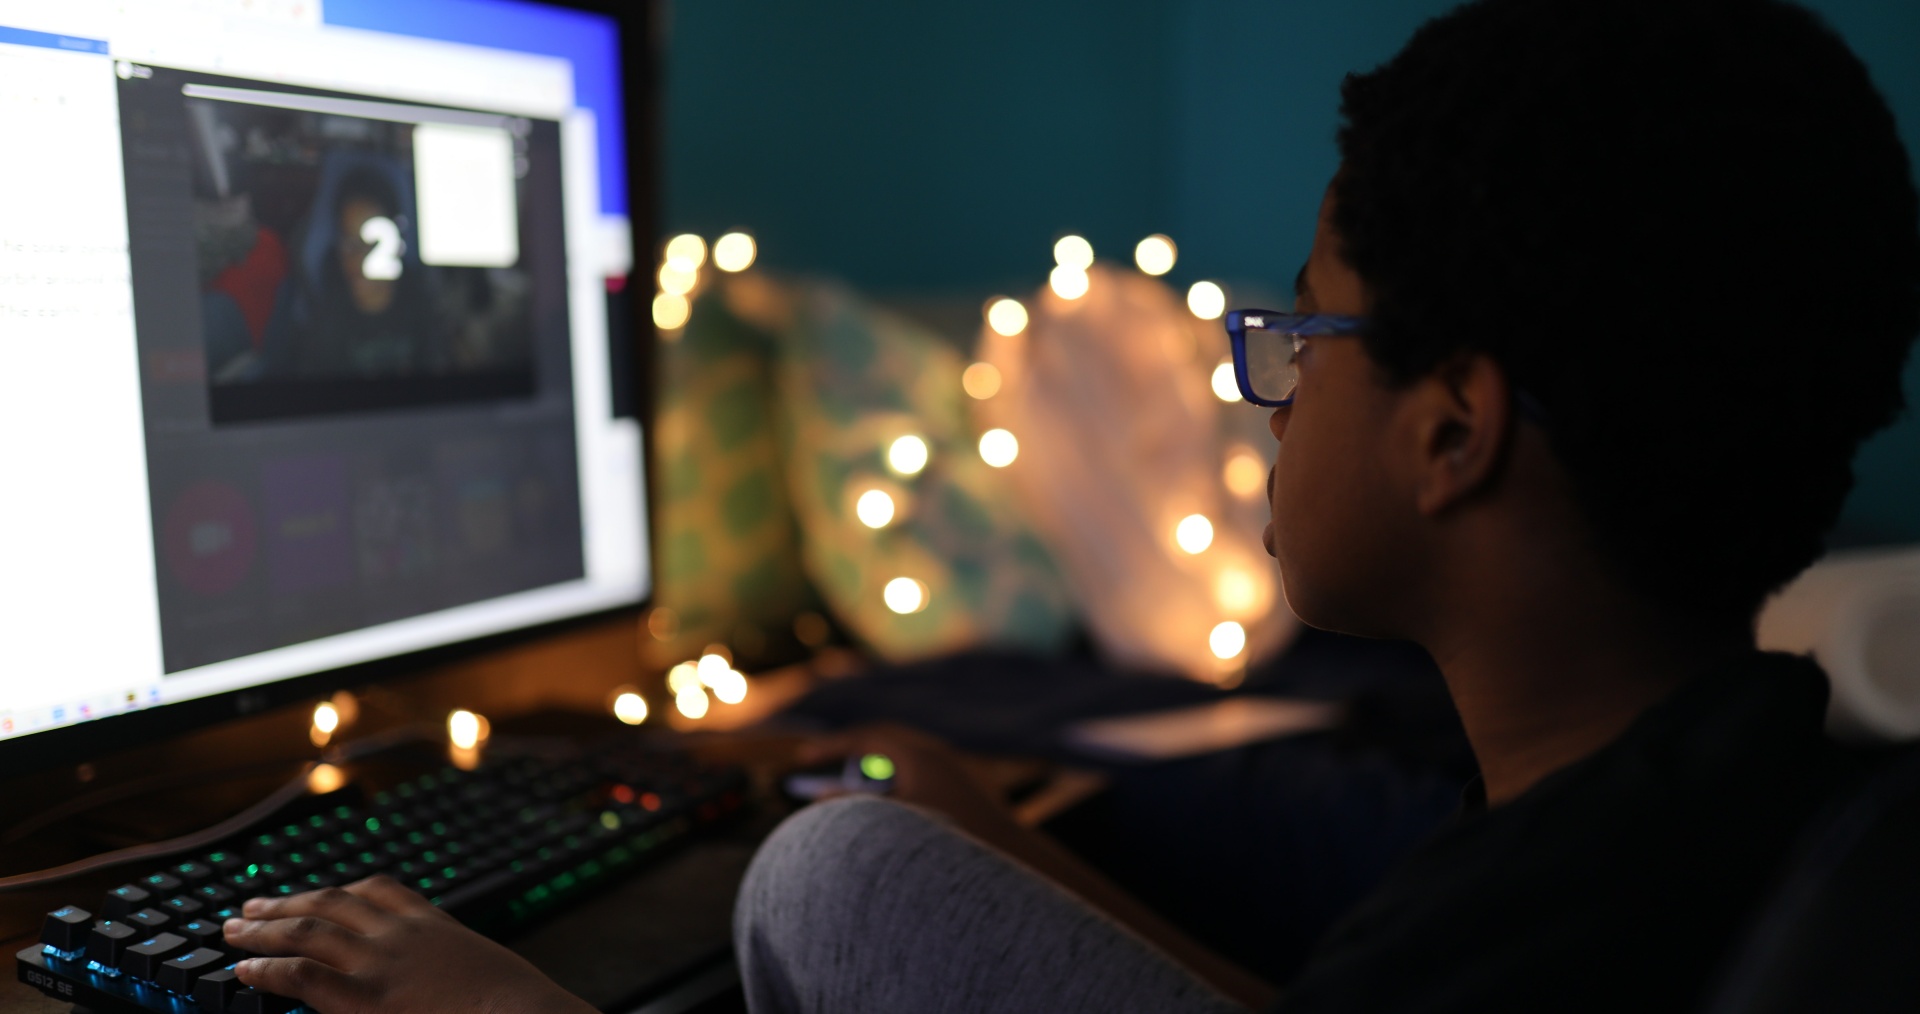 A boy sits at a computer screen